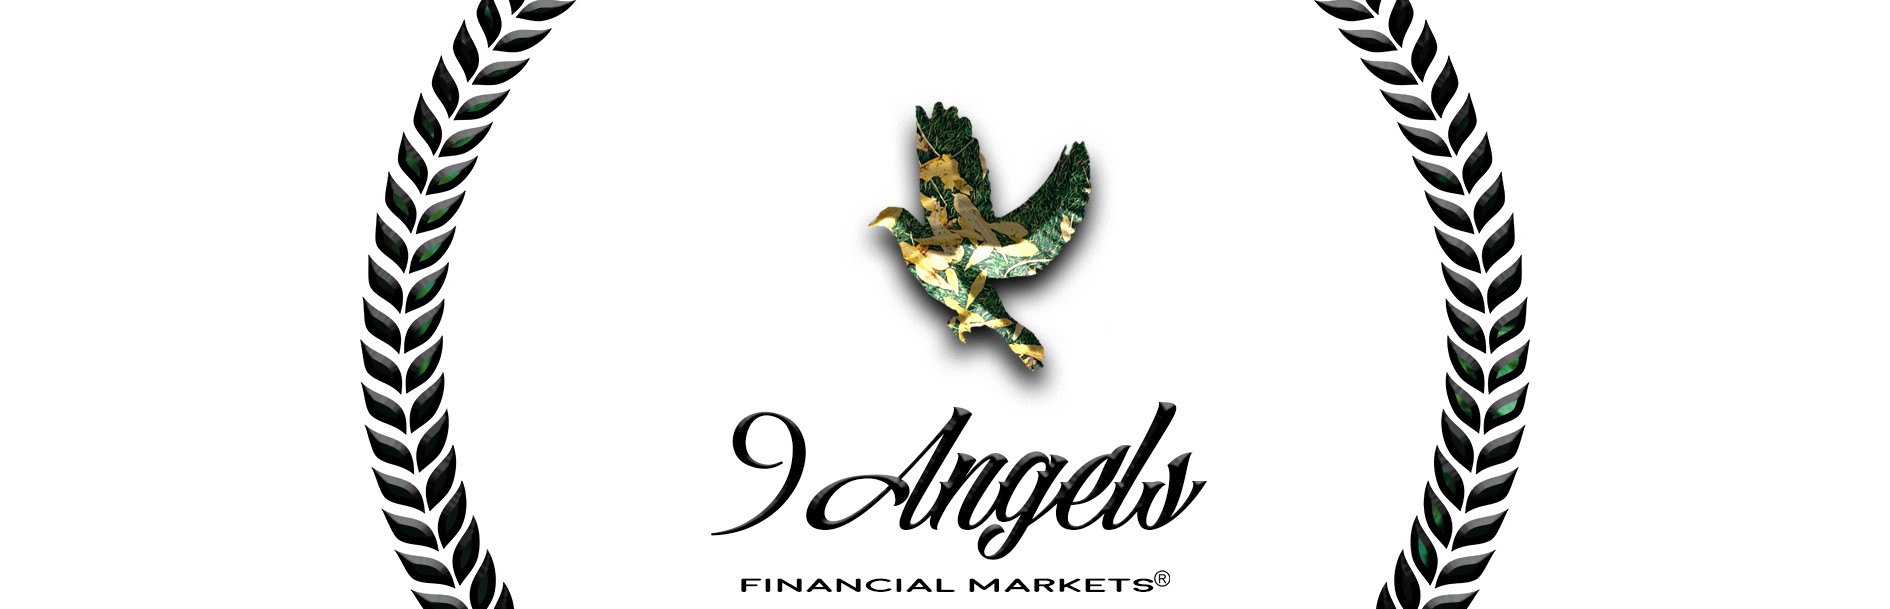 9 Angels Financial Markets